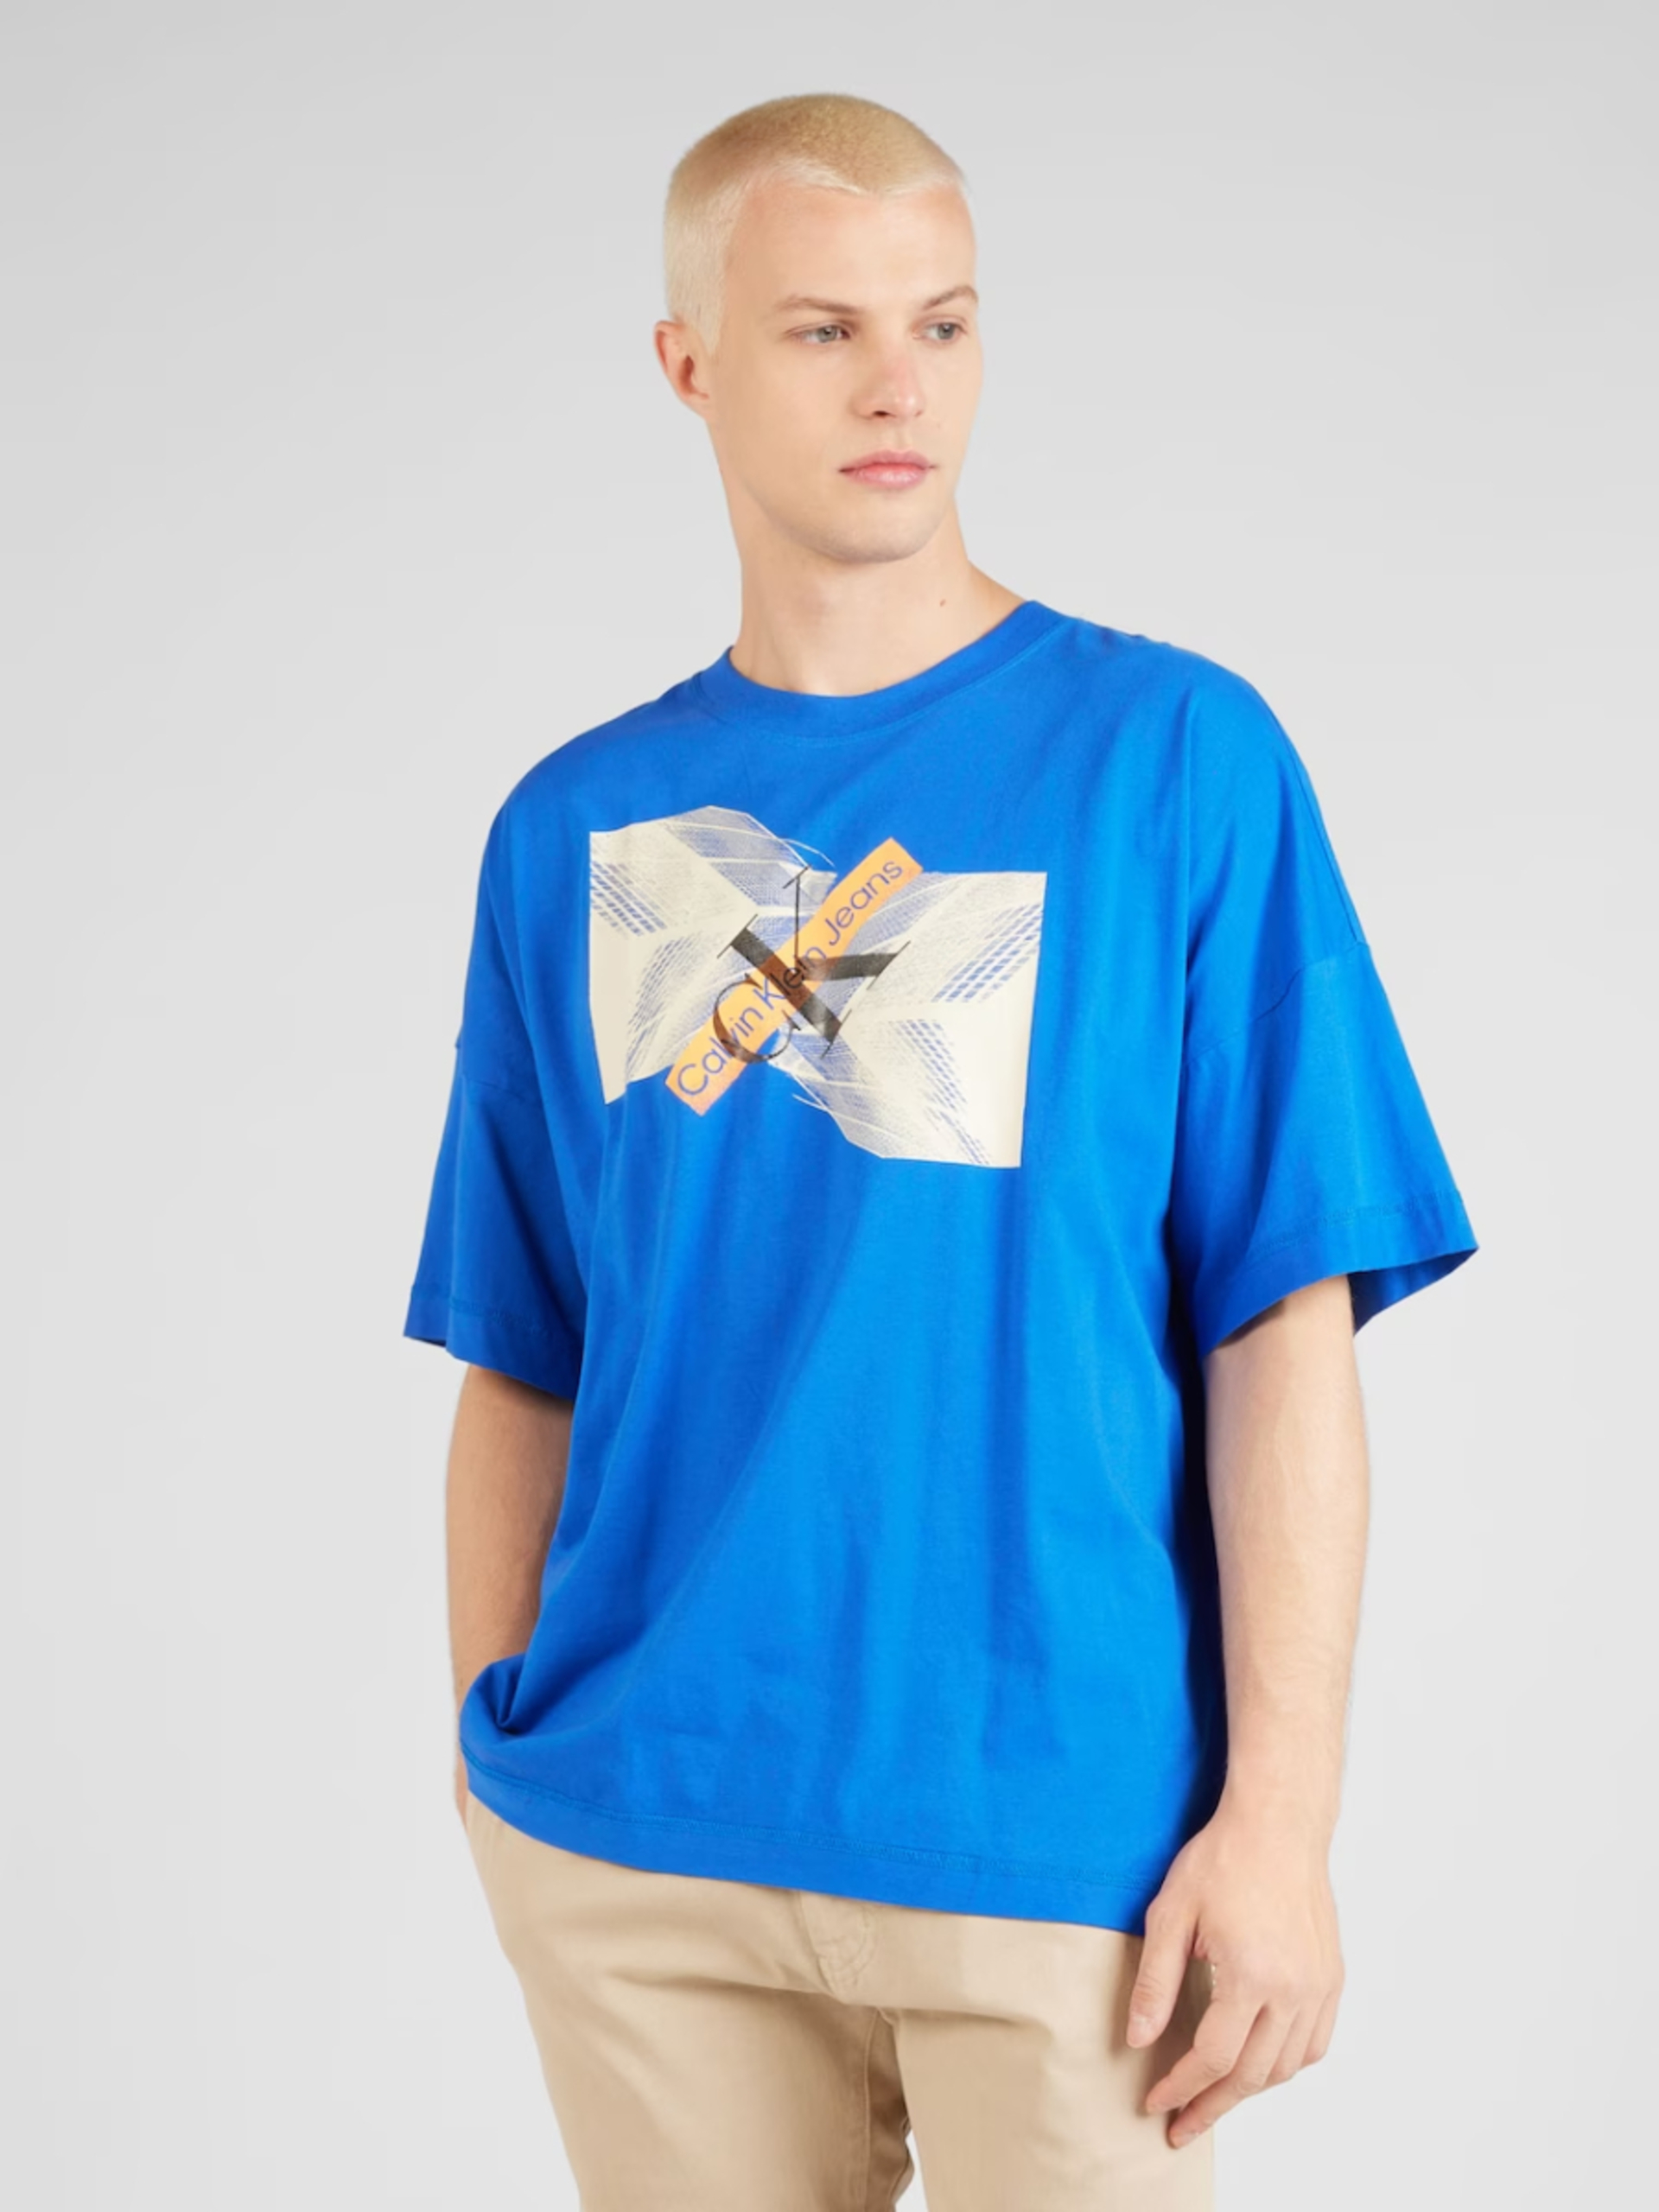 Calvin Klein pánské modré tričko - M (C6X)